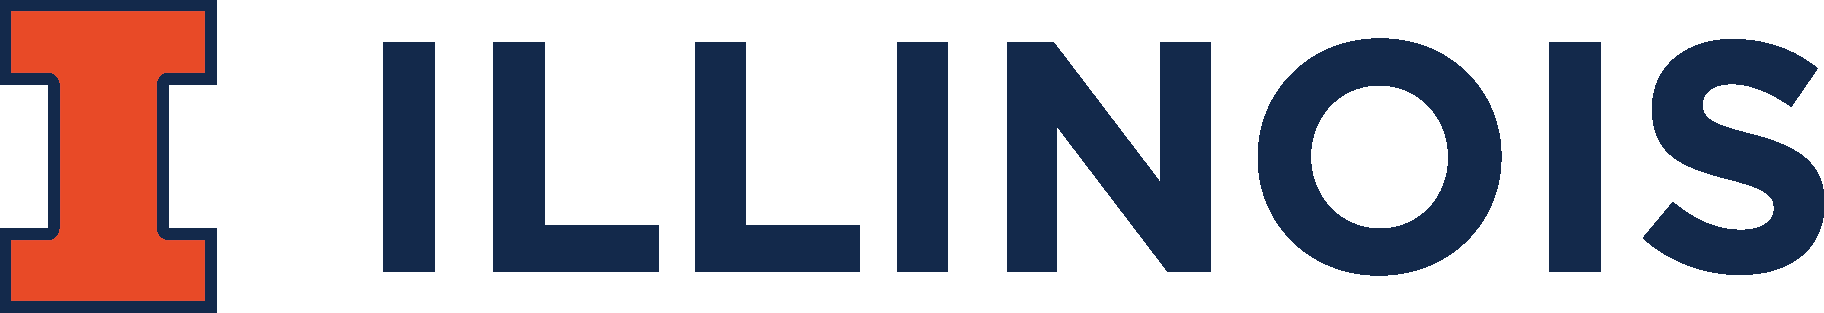 UIUC Logo and Seal [University of Illinois at Urbana Champaign   illinois.edu] png